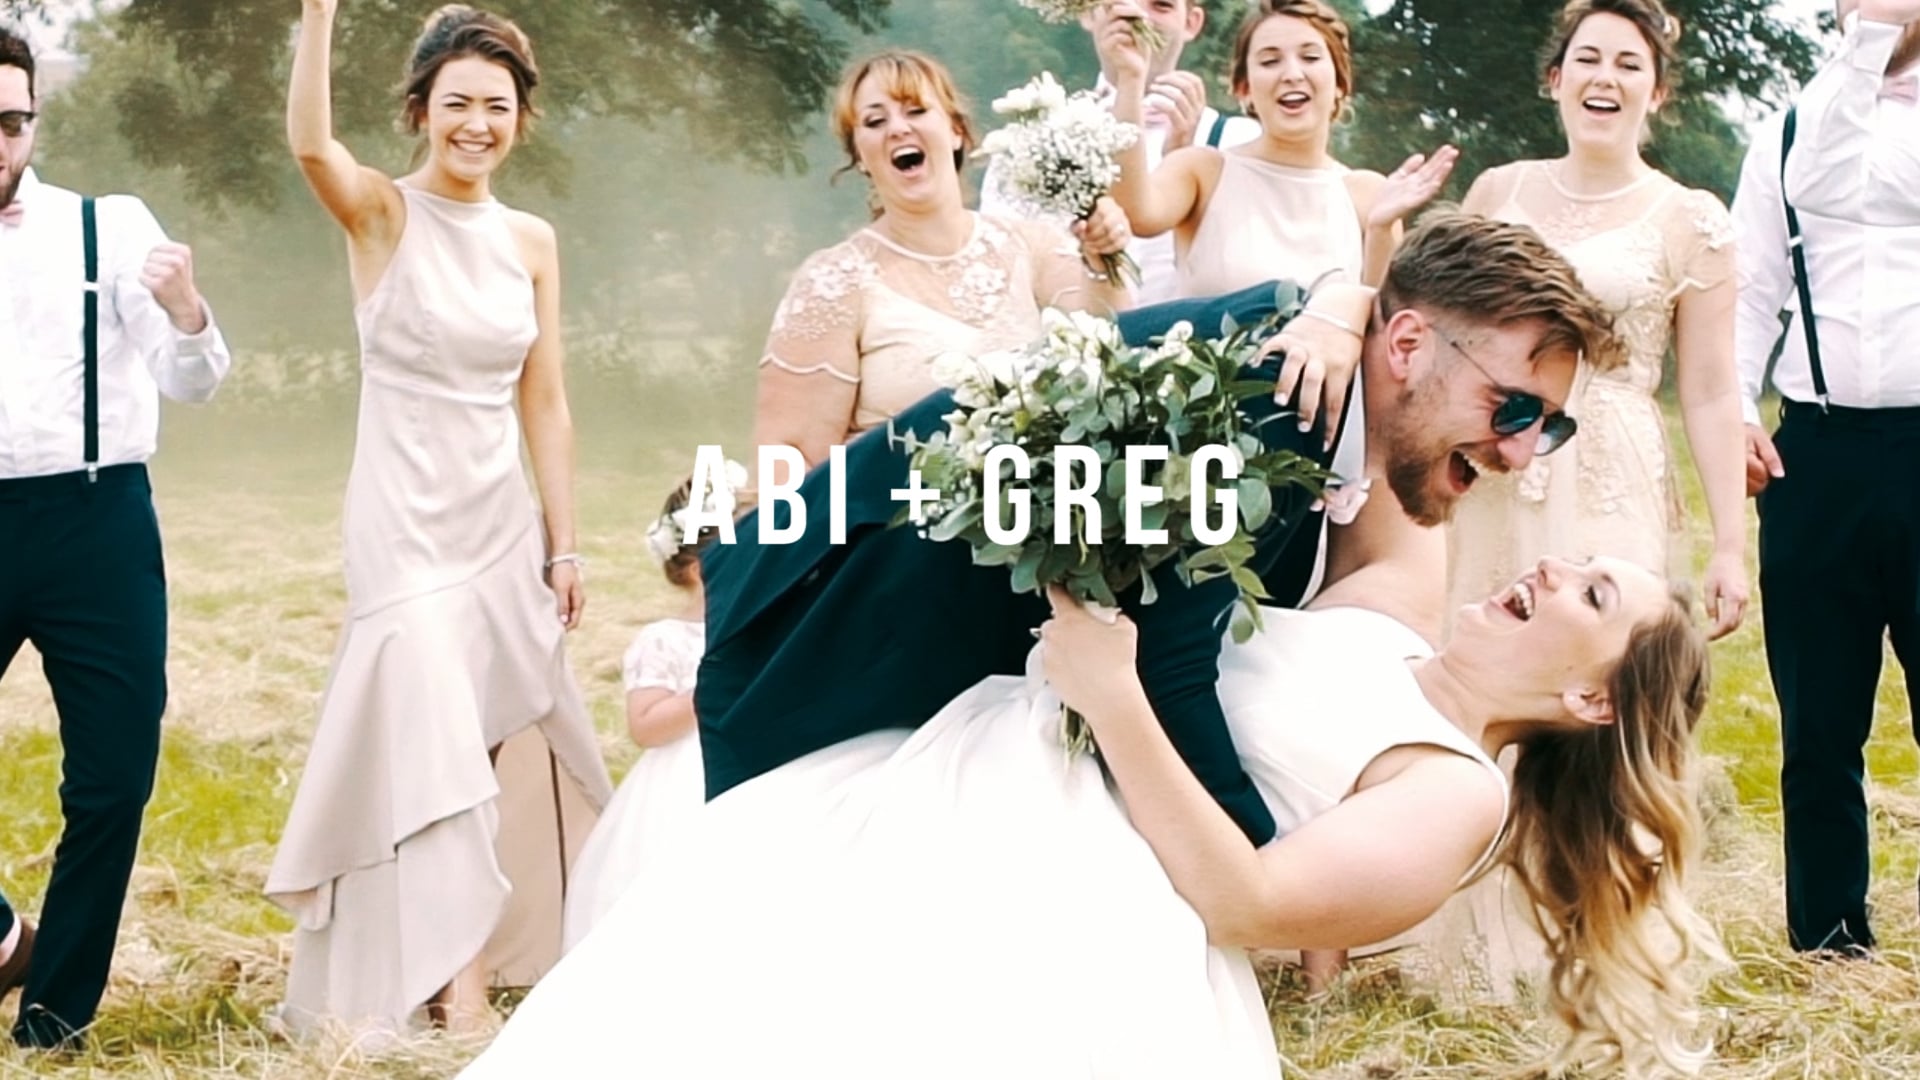 Abi & Greg | The Wedding Film